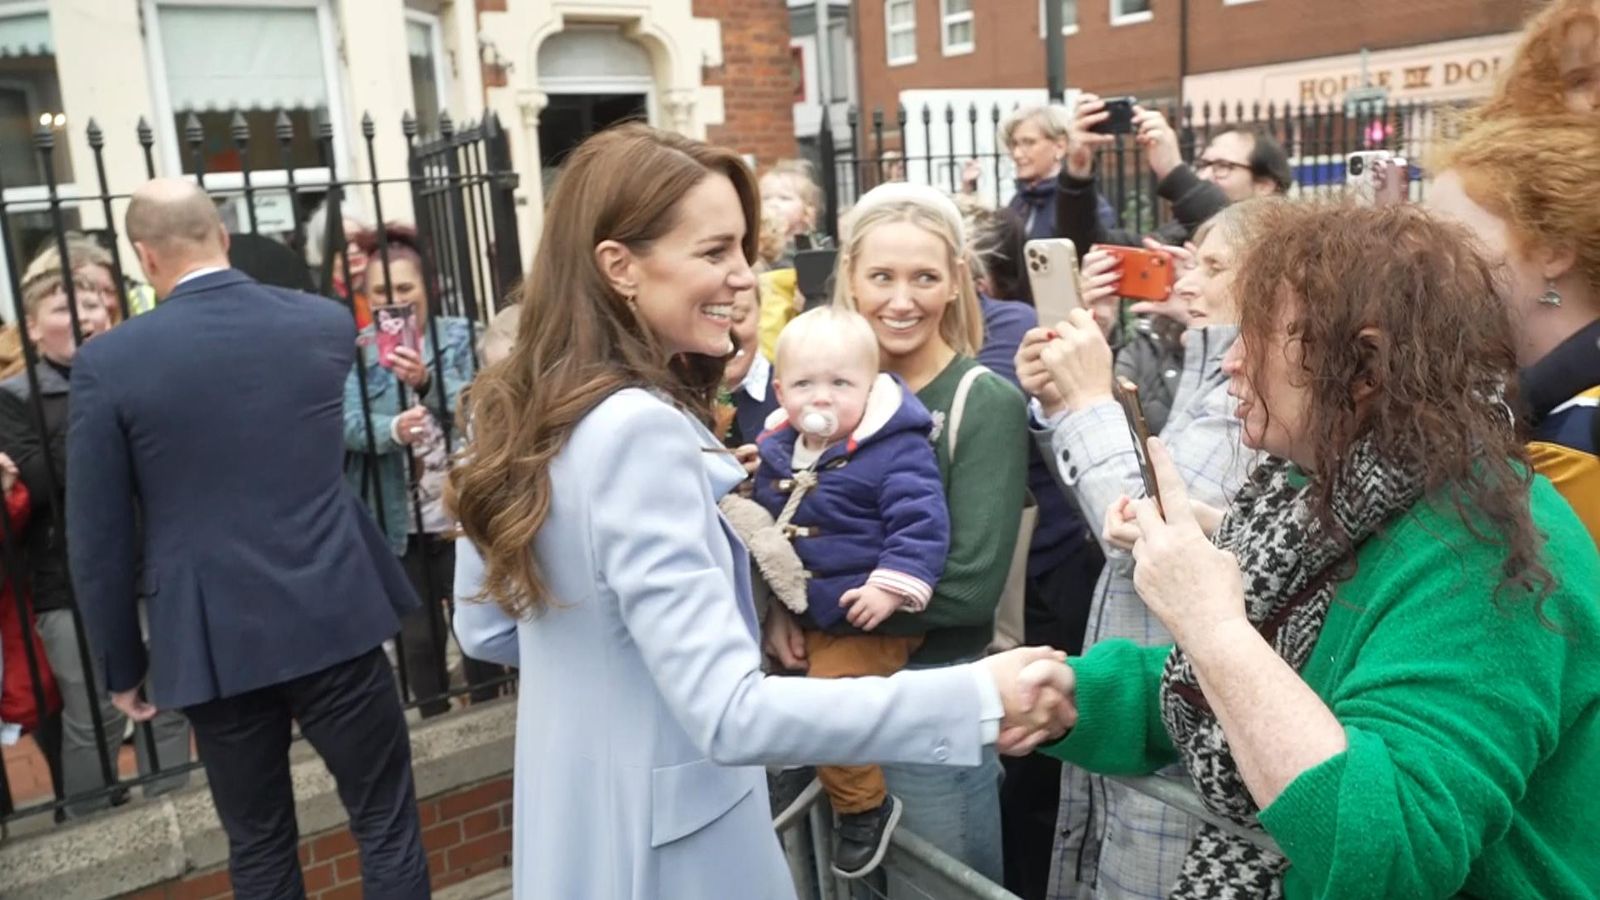 Princess of Wales challenged during royal visit to Northern Ireland